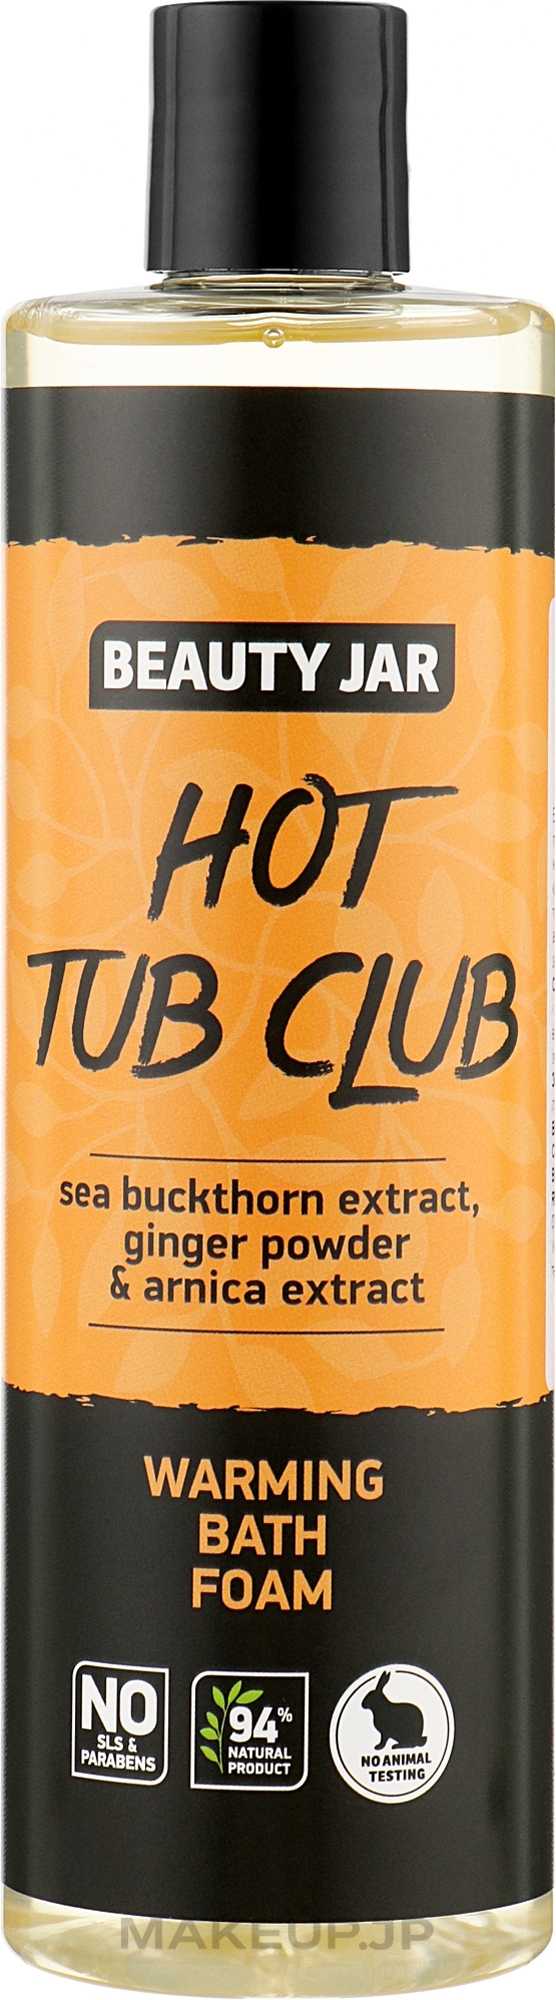 Warming Bath Foam with Sea Buckthorn Extract, Ginger Powder & Arnica Extract - Beauty Jar Hot Tub Club Warming Bath Foam — photo 400 ml